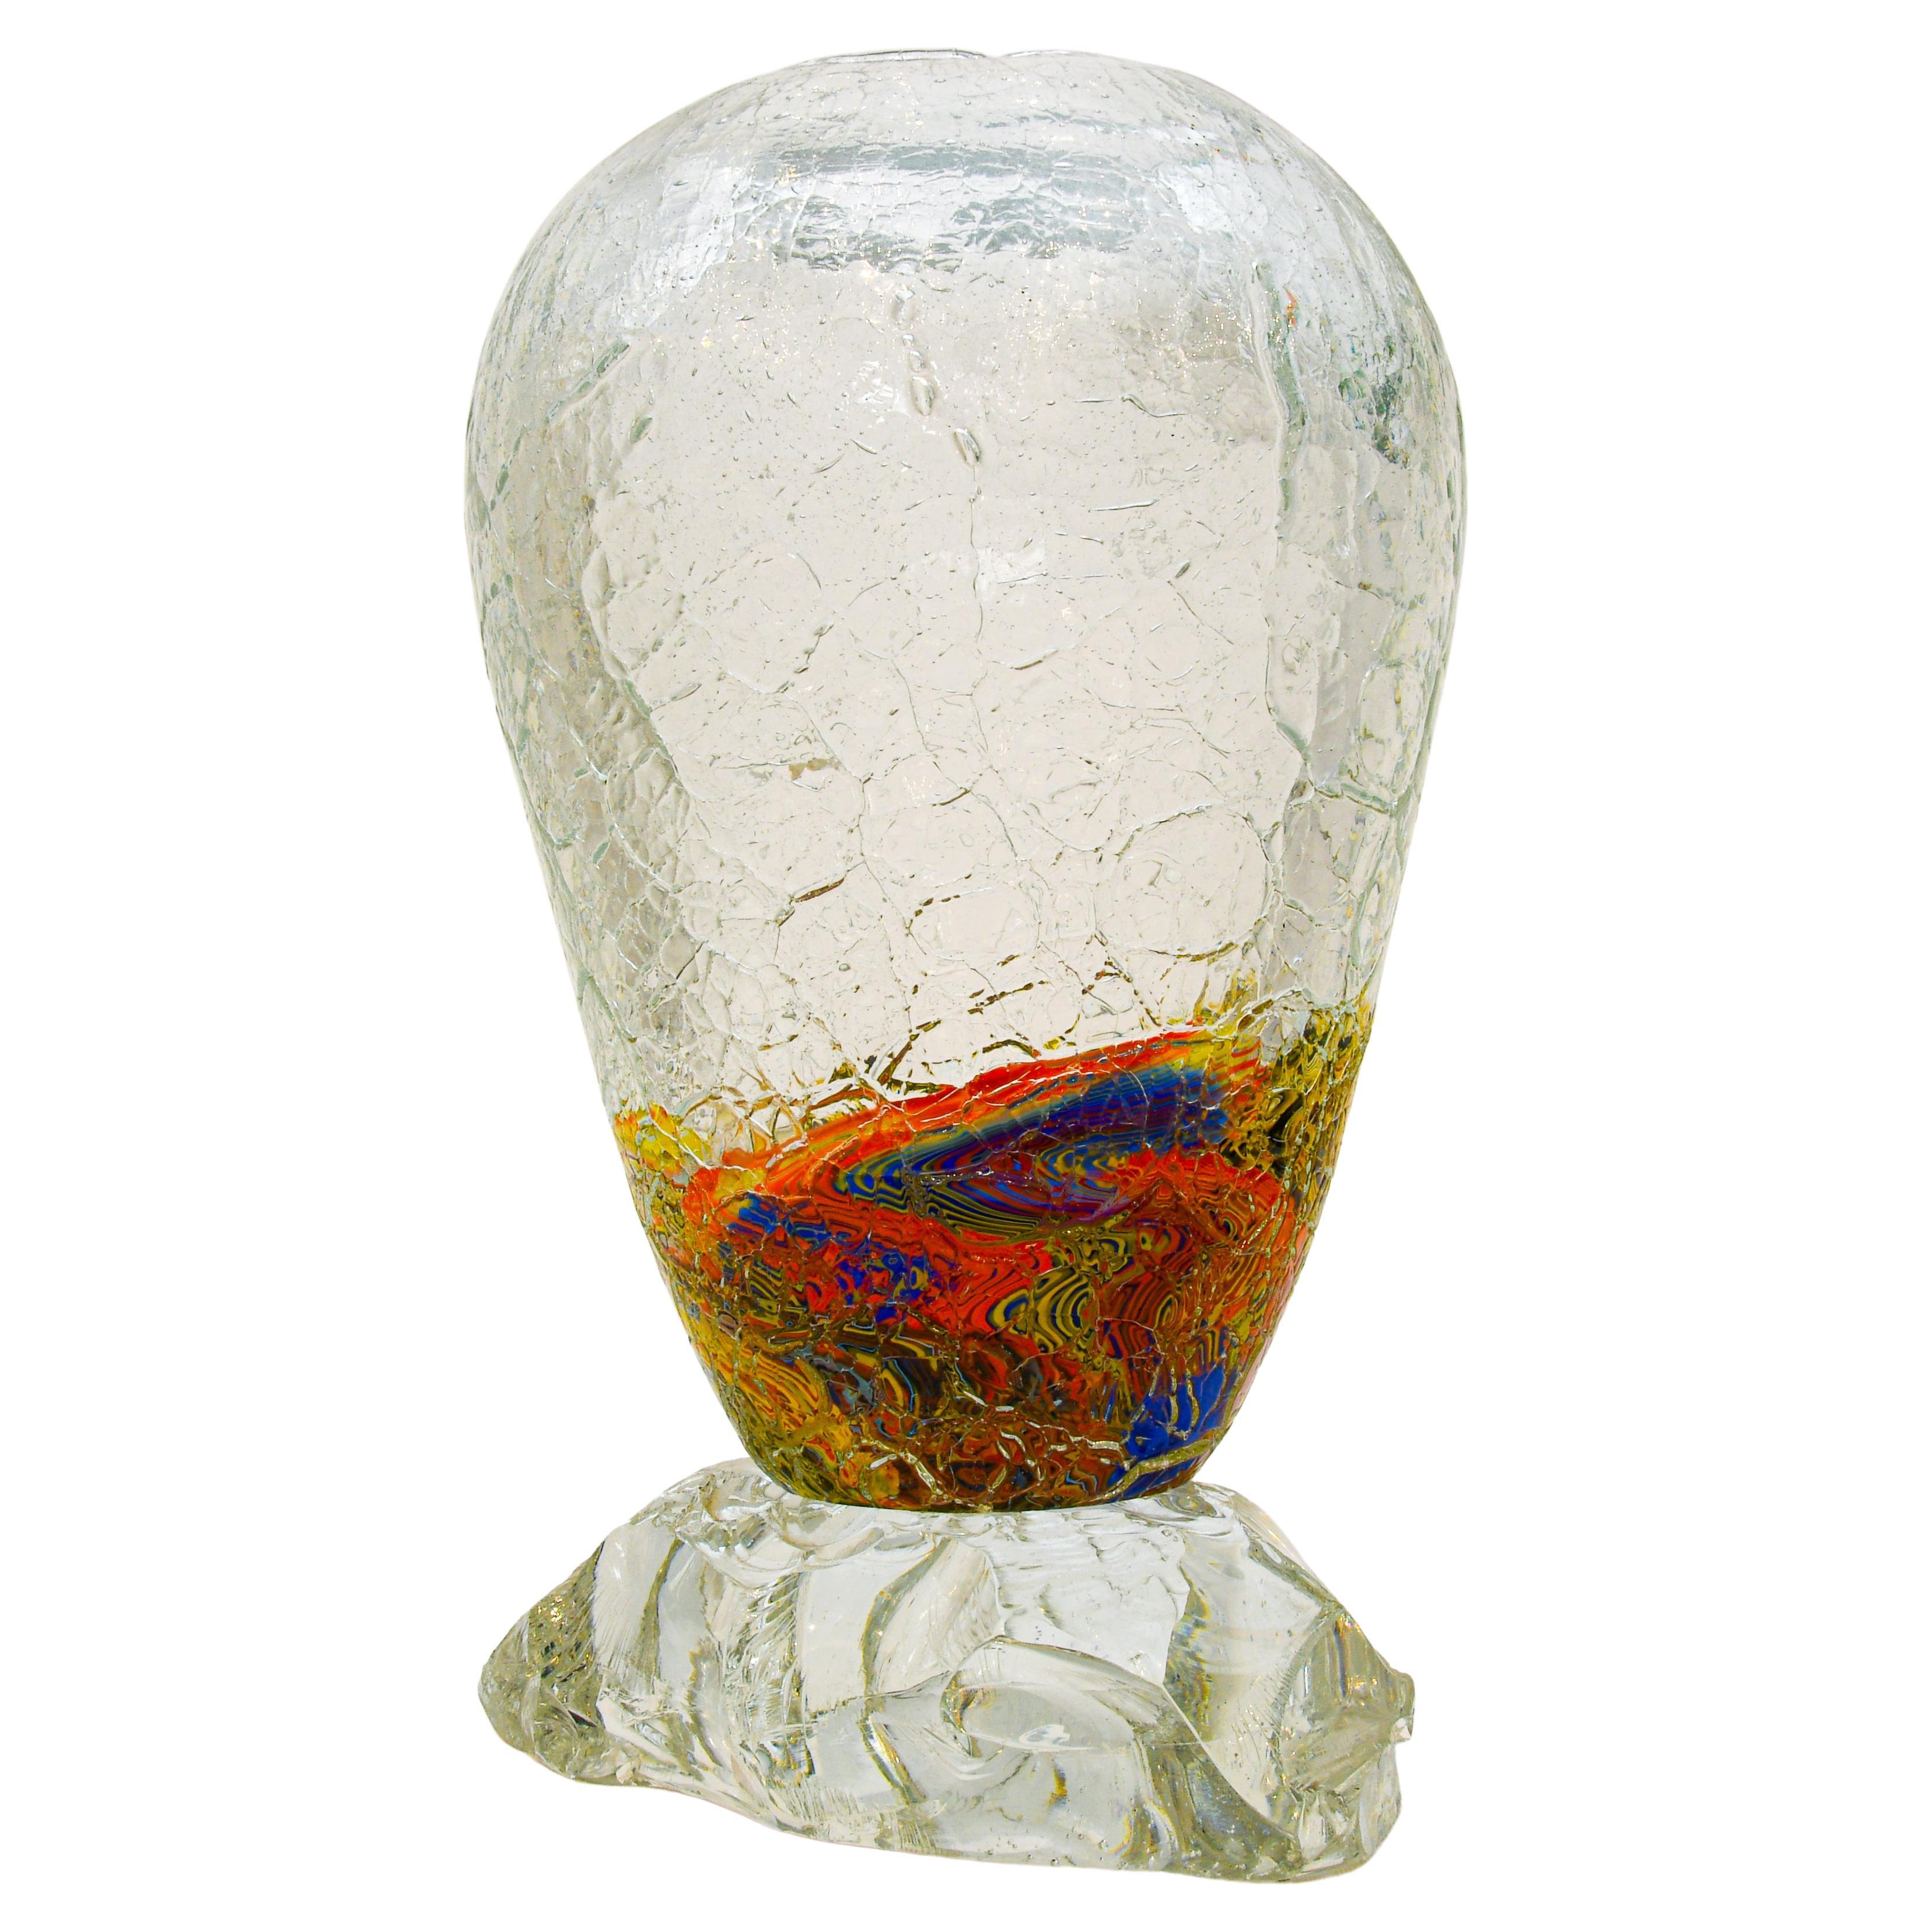 Großes Muranoglas  Crackle-Glasvase mit facettiertem, facettiertem Glasblocksockel